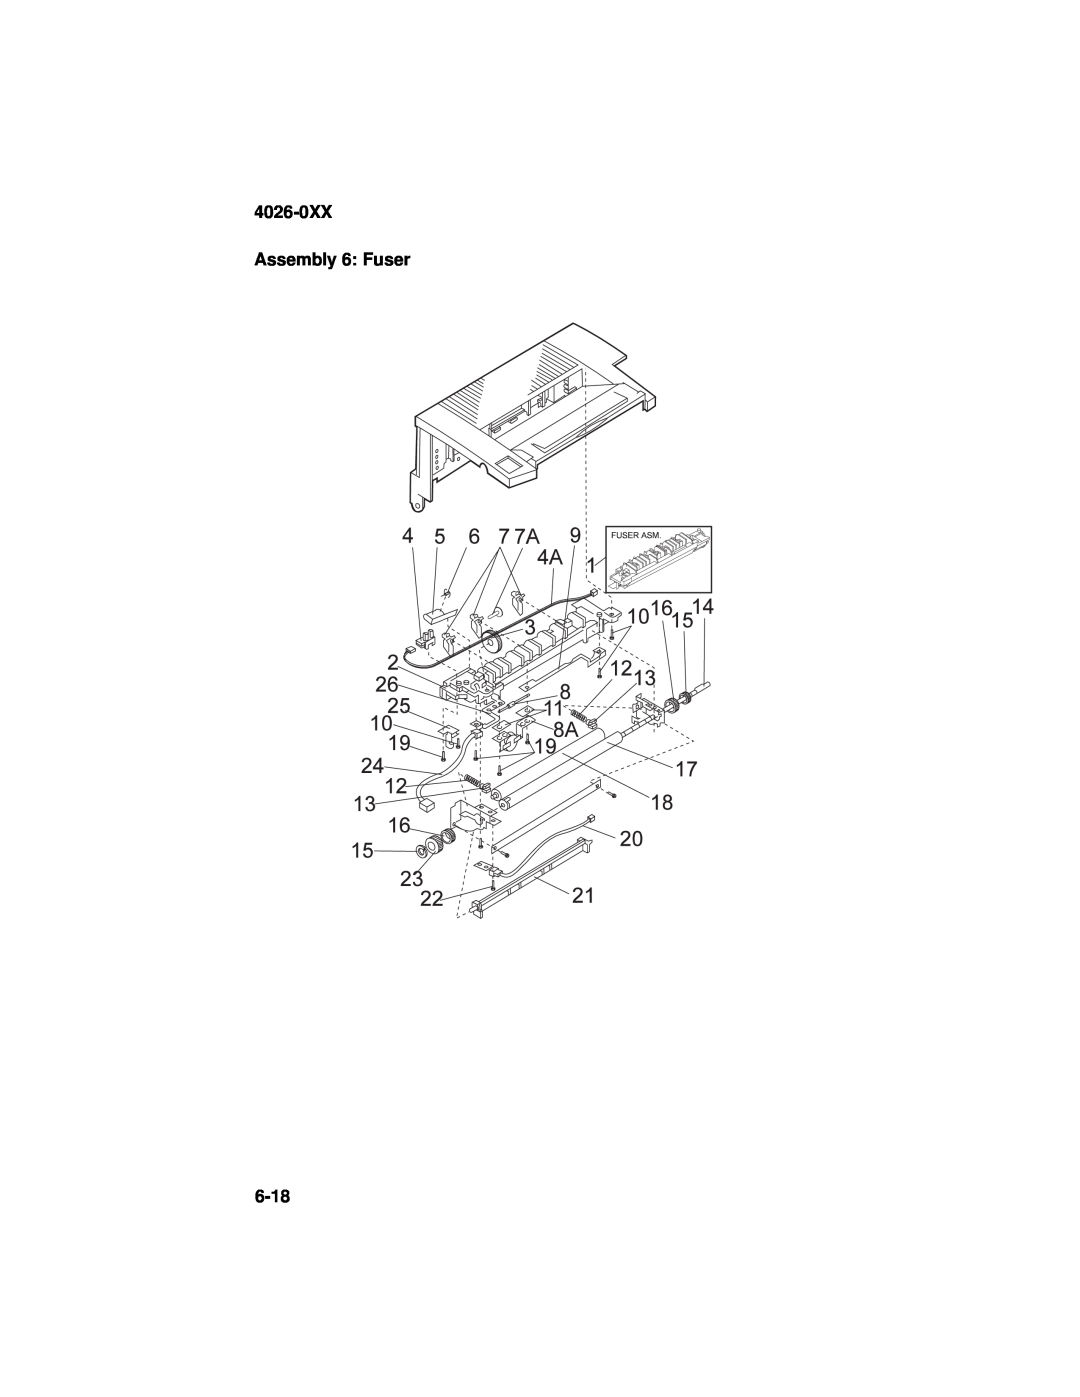 Lexmark manual 4026-0XX Assembly 6: Fuser, 6-18 